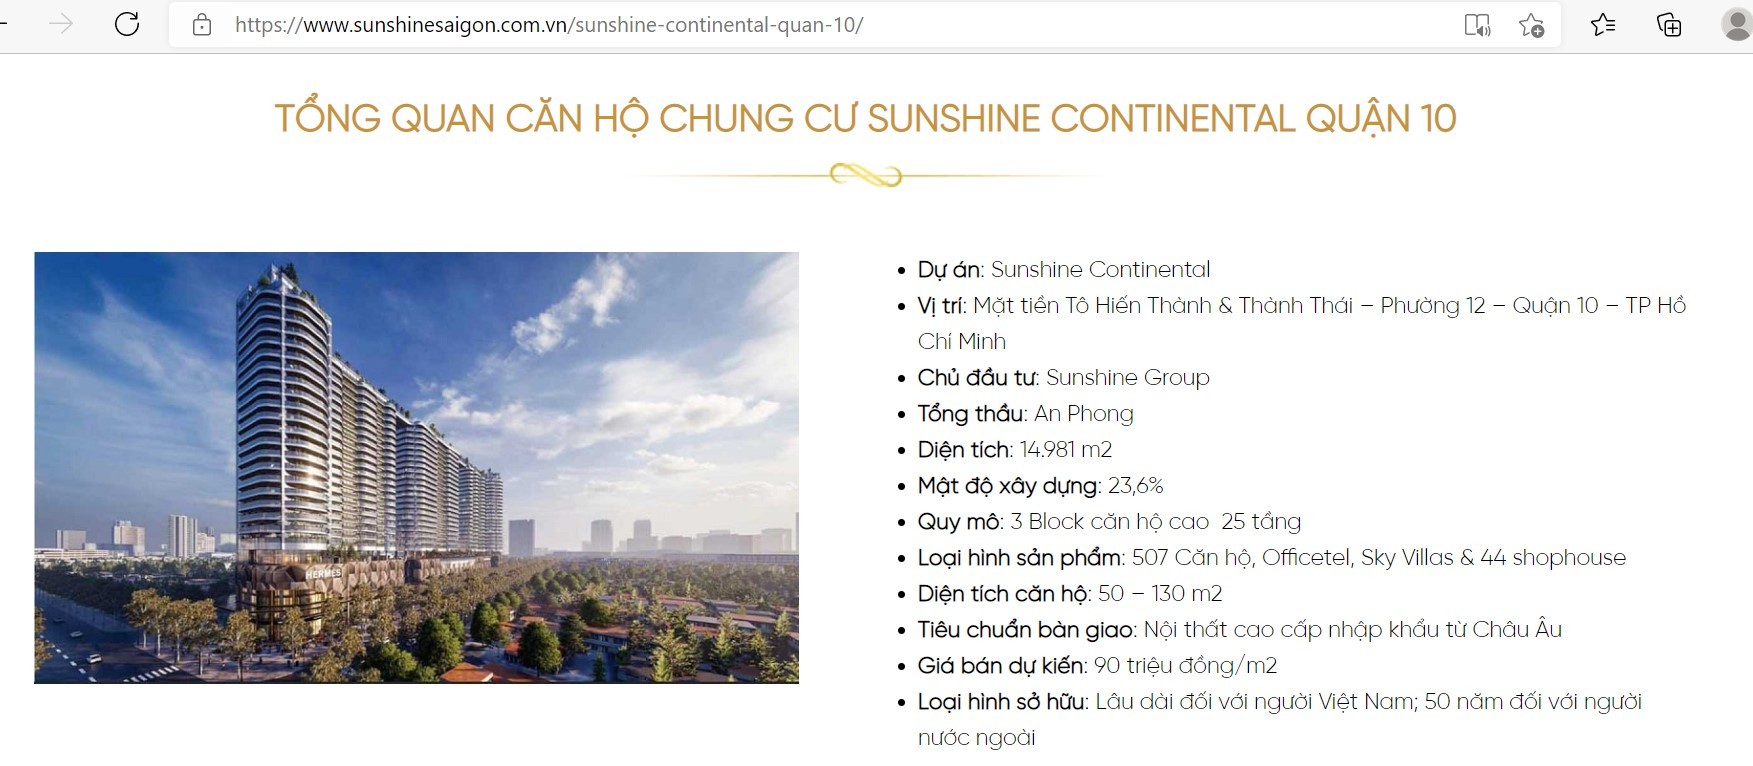 du-an-sunshine-continental-lien-tuc-bi-canh-bao-vi-quang-cao-no-dulichvnnetvn-qqcc-1635241885.jpg